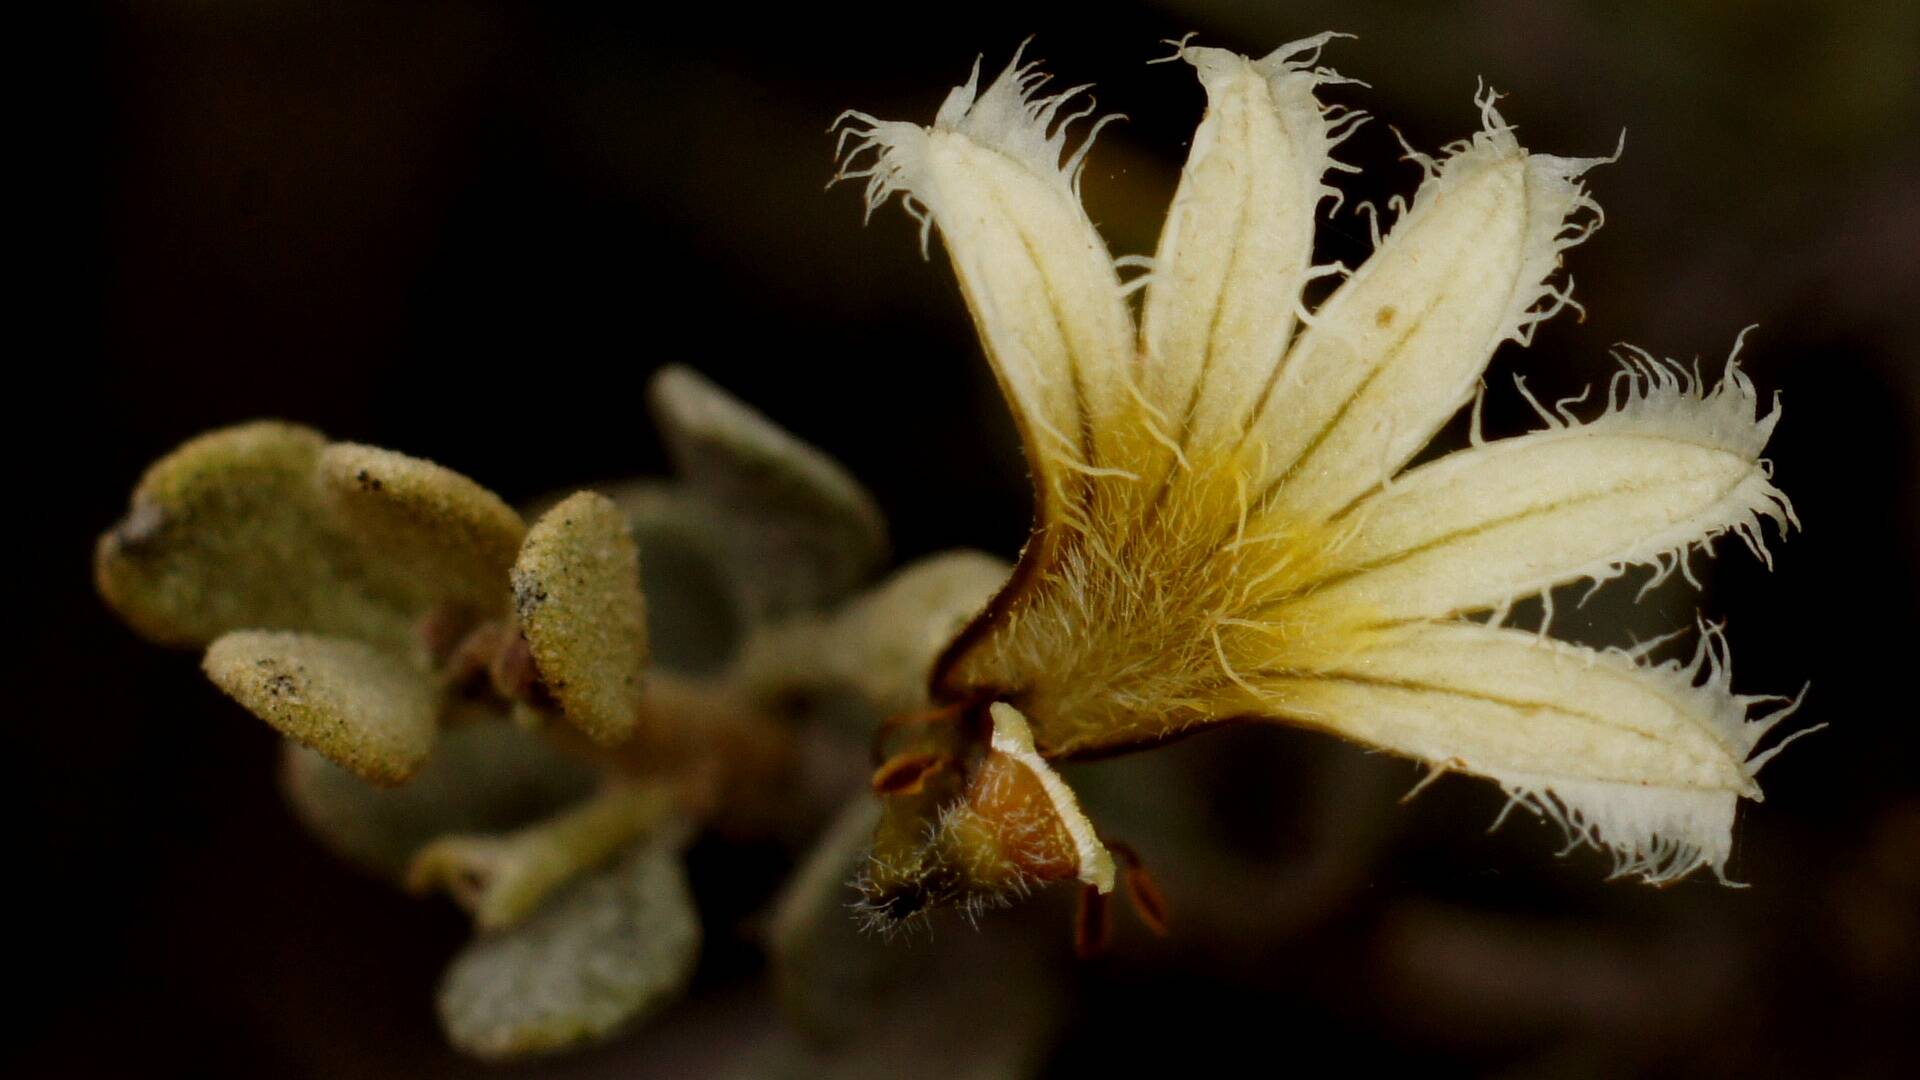 Spiny Fan-flower (Scaevola spinescens)